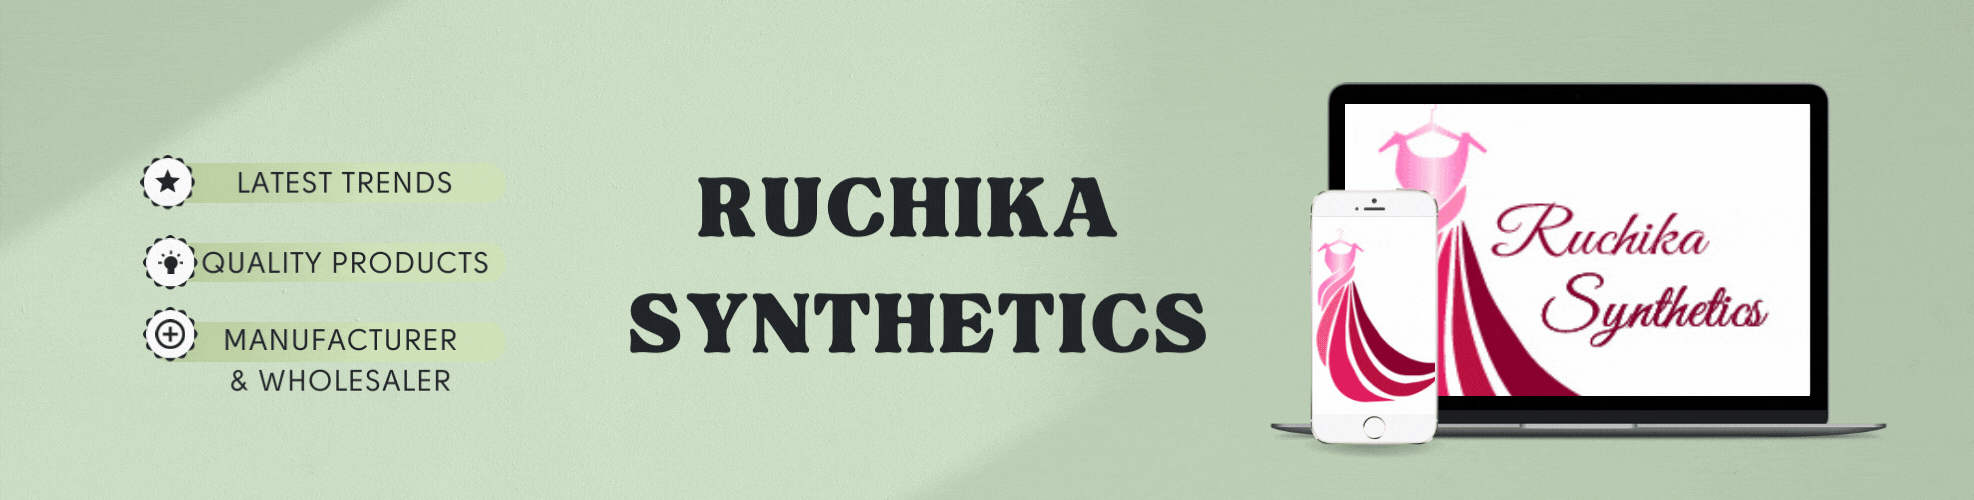 Ruchika Synthetics| Designer Kurti Manufacturer in Kolkata | Ladies Kurti Wholesaler in Kolkata | Ruchika Synthetics